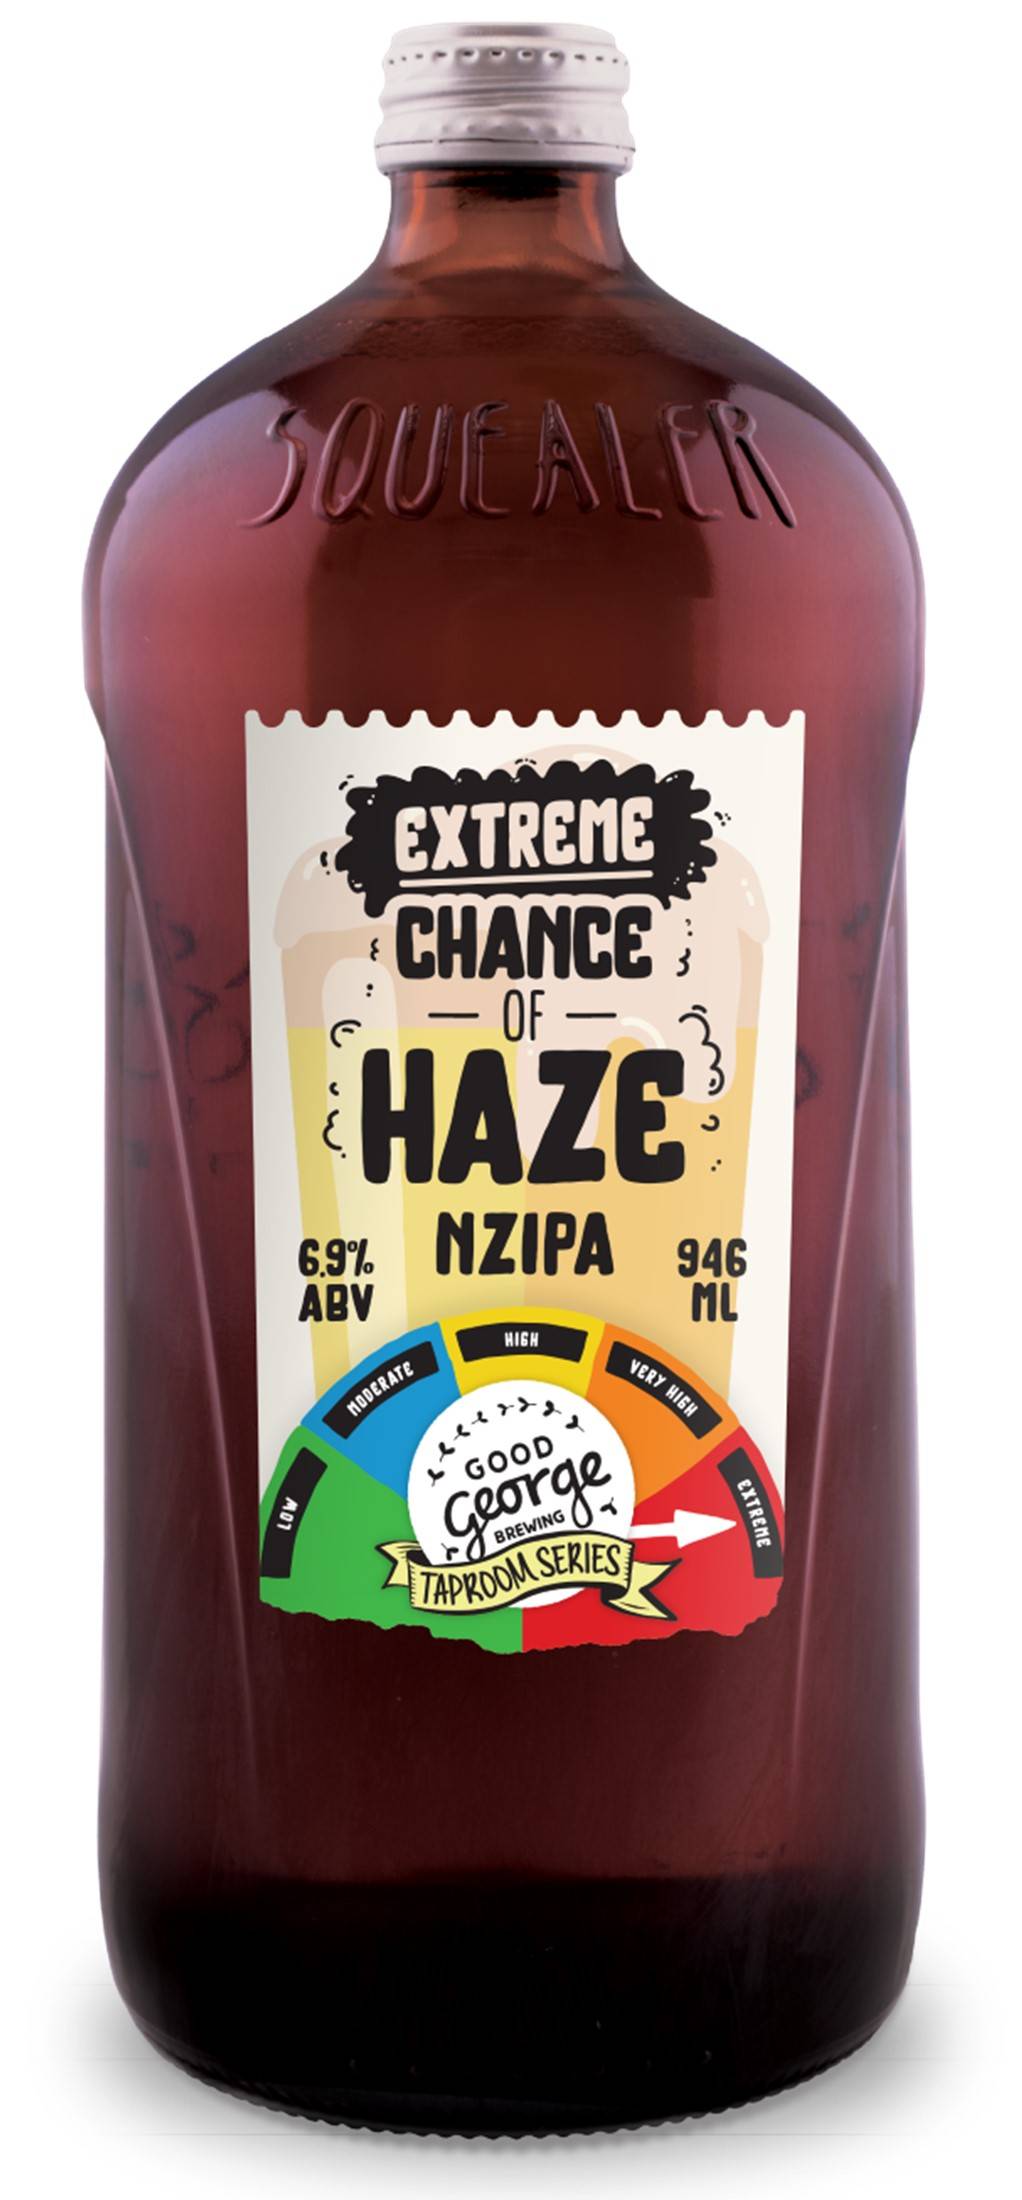 Extreme Chance of Haze